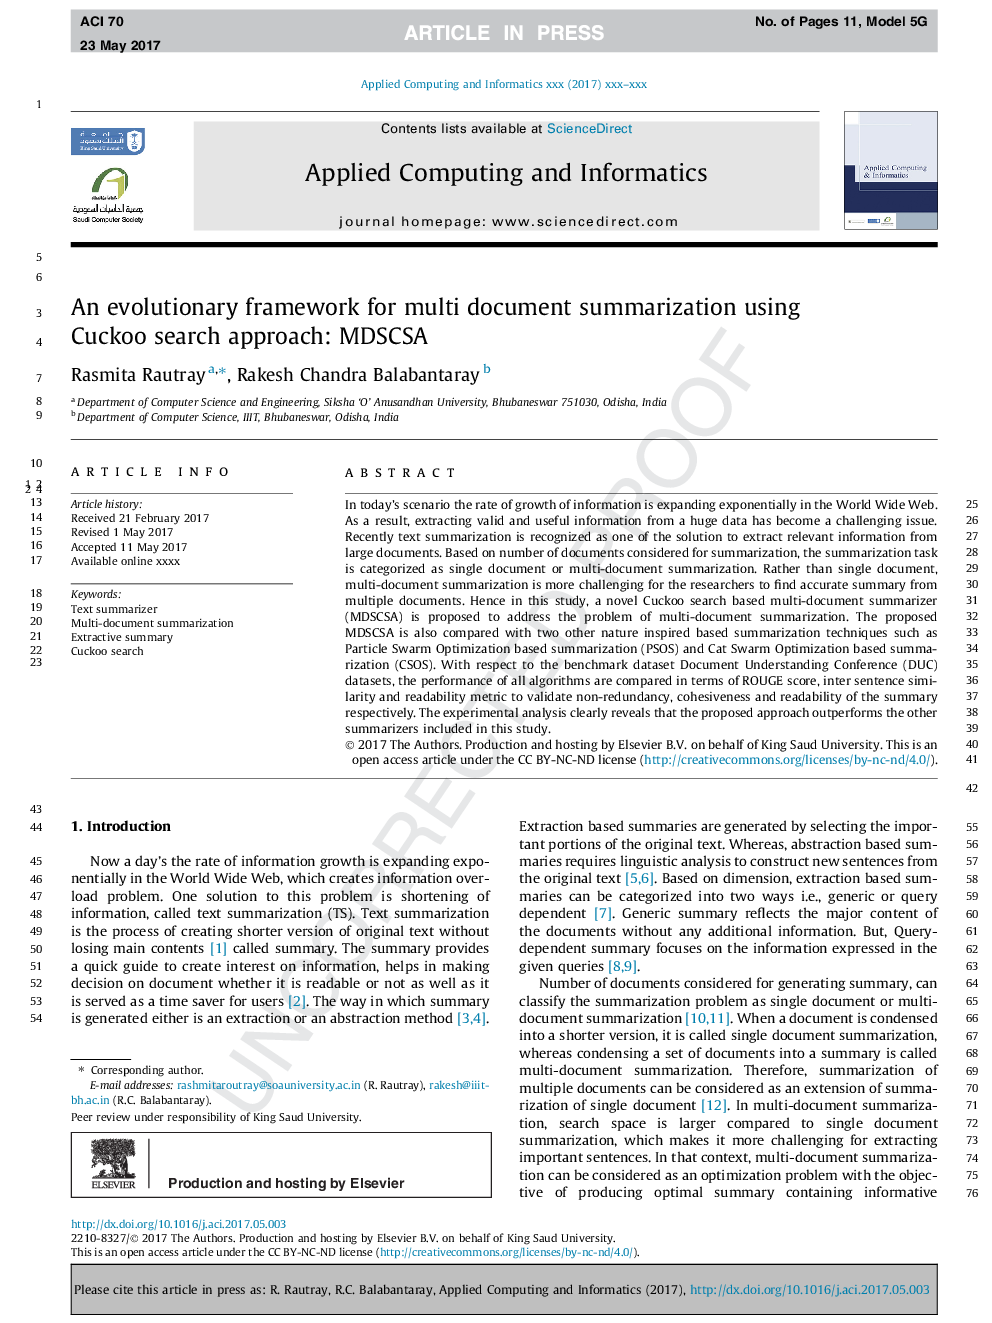 An evolutionary framework for multi document summarization using Cuckoo search approach: MDSCSA